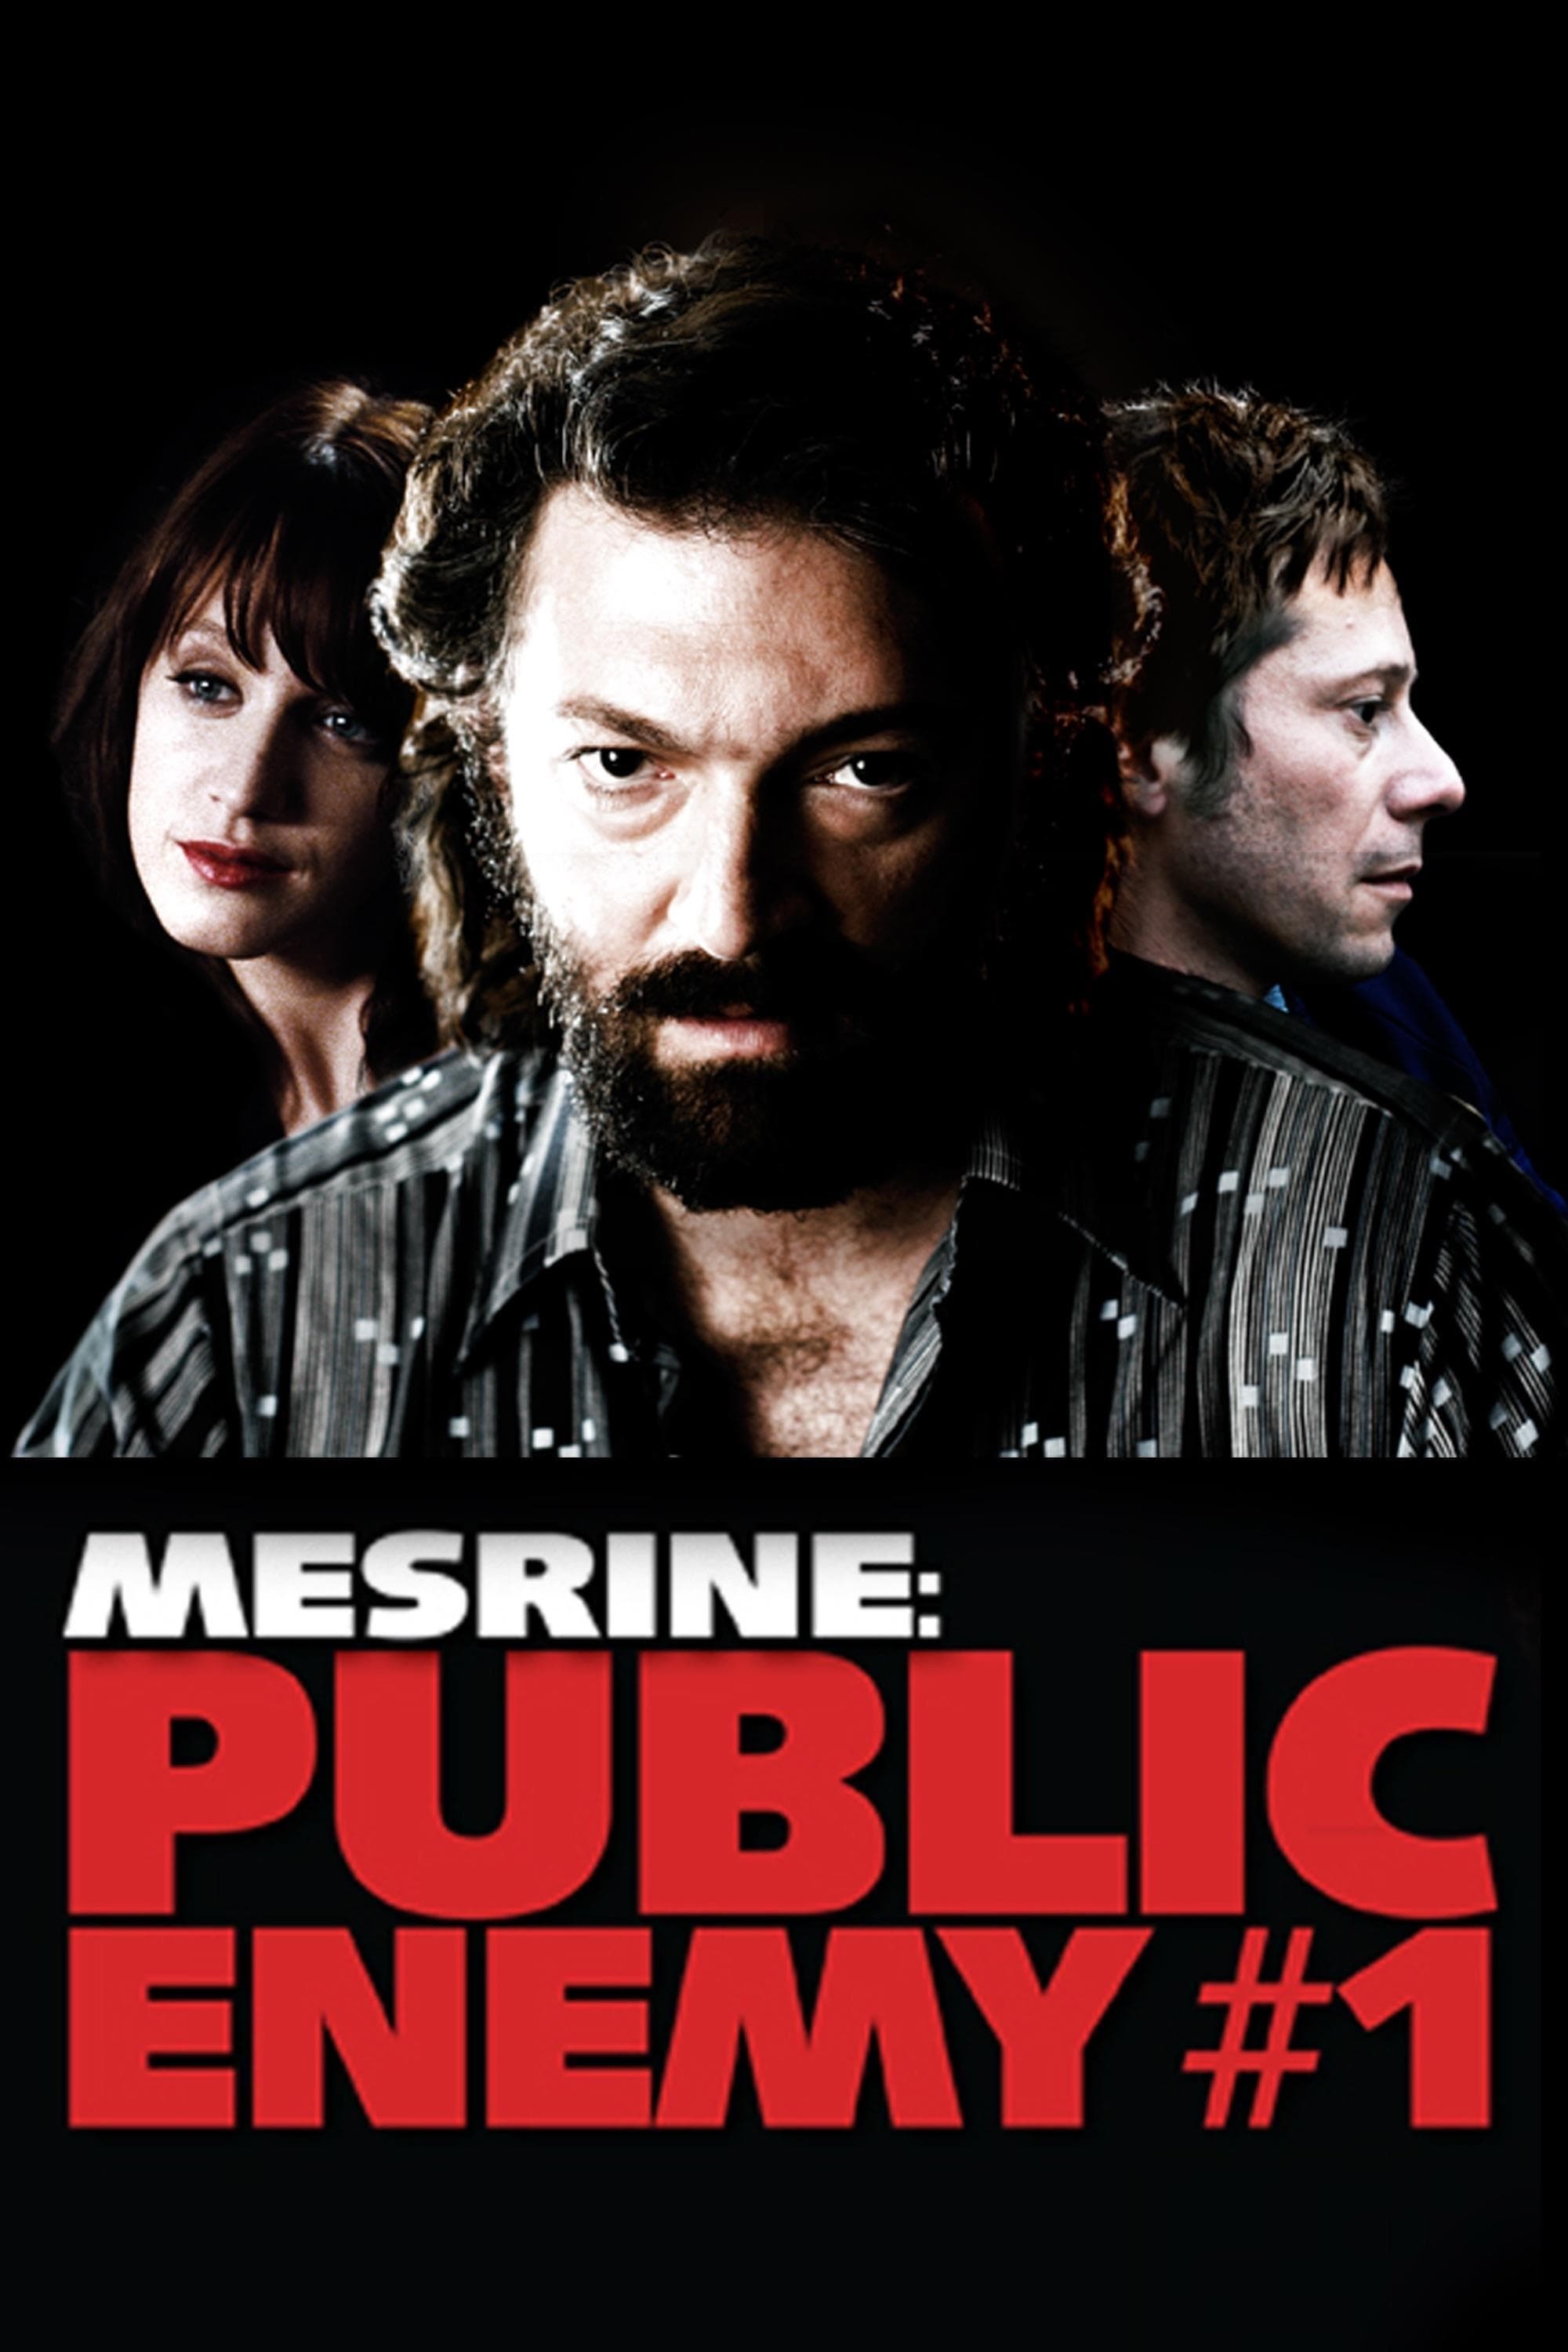 Mesrine: Public Enemy #1 on FREECABLE TV